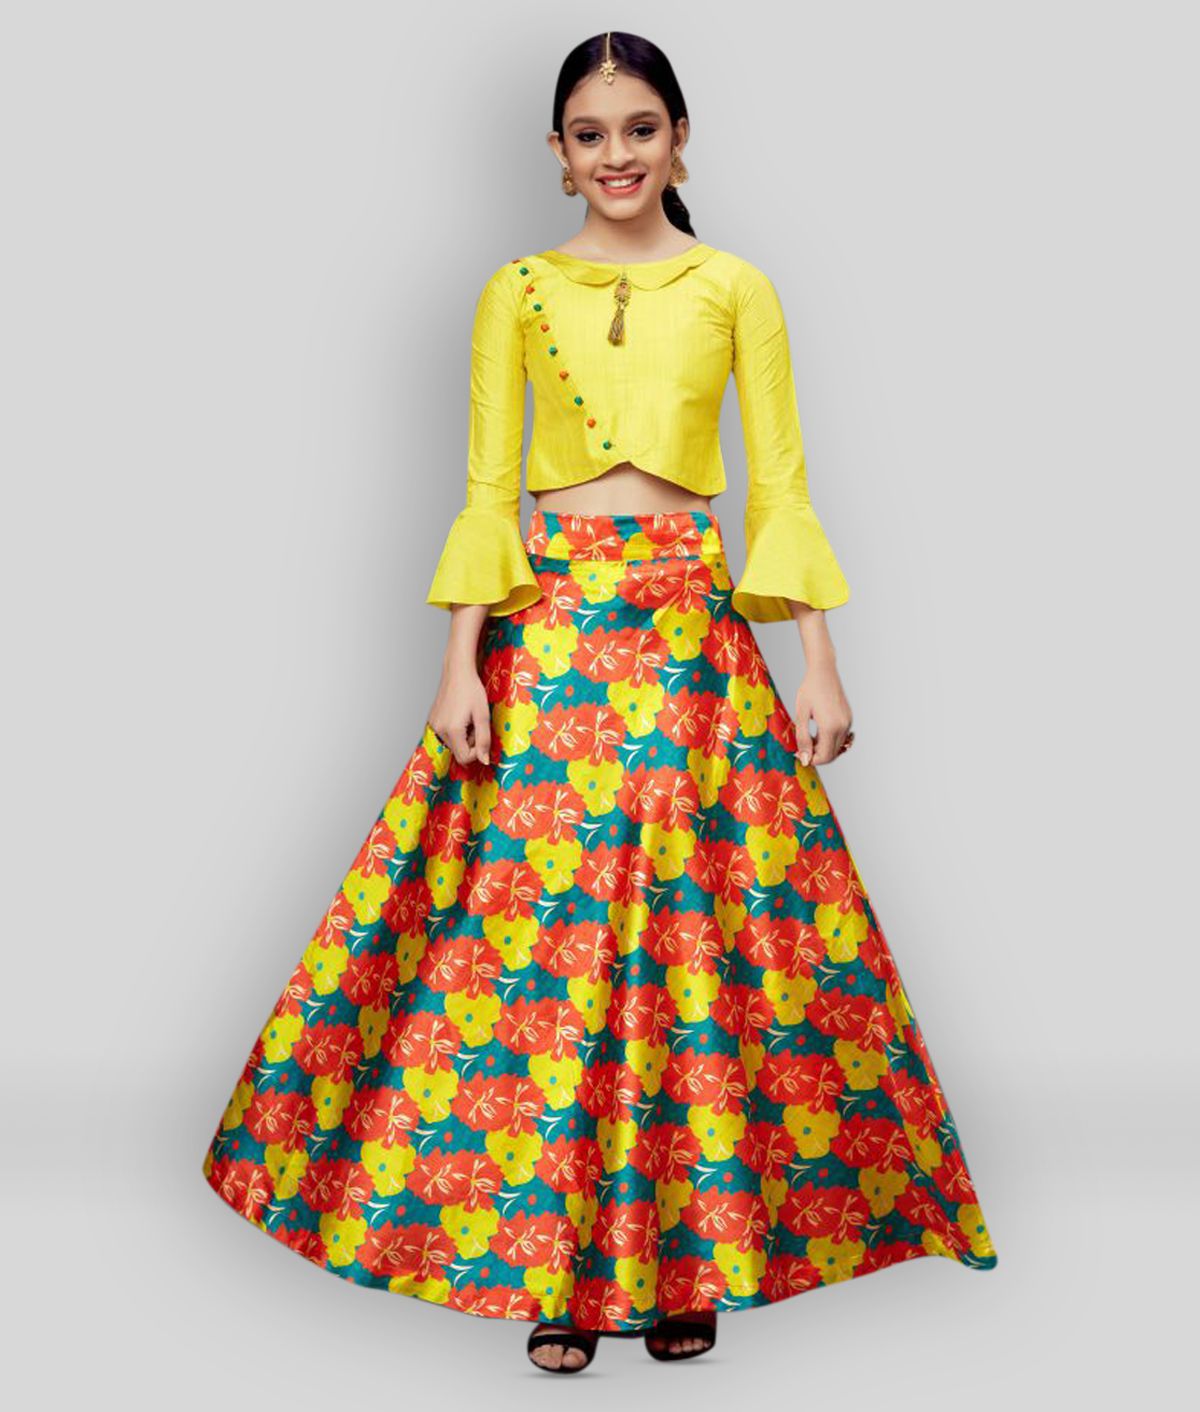     			Mirrow Trade Girl's Designer Top with Lehenga Skirt